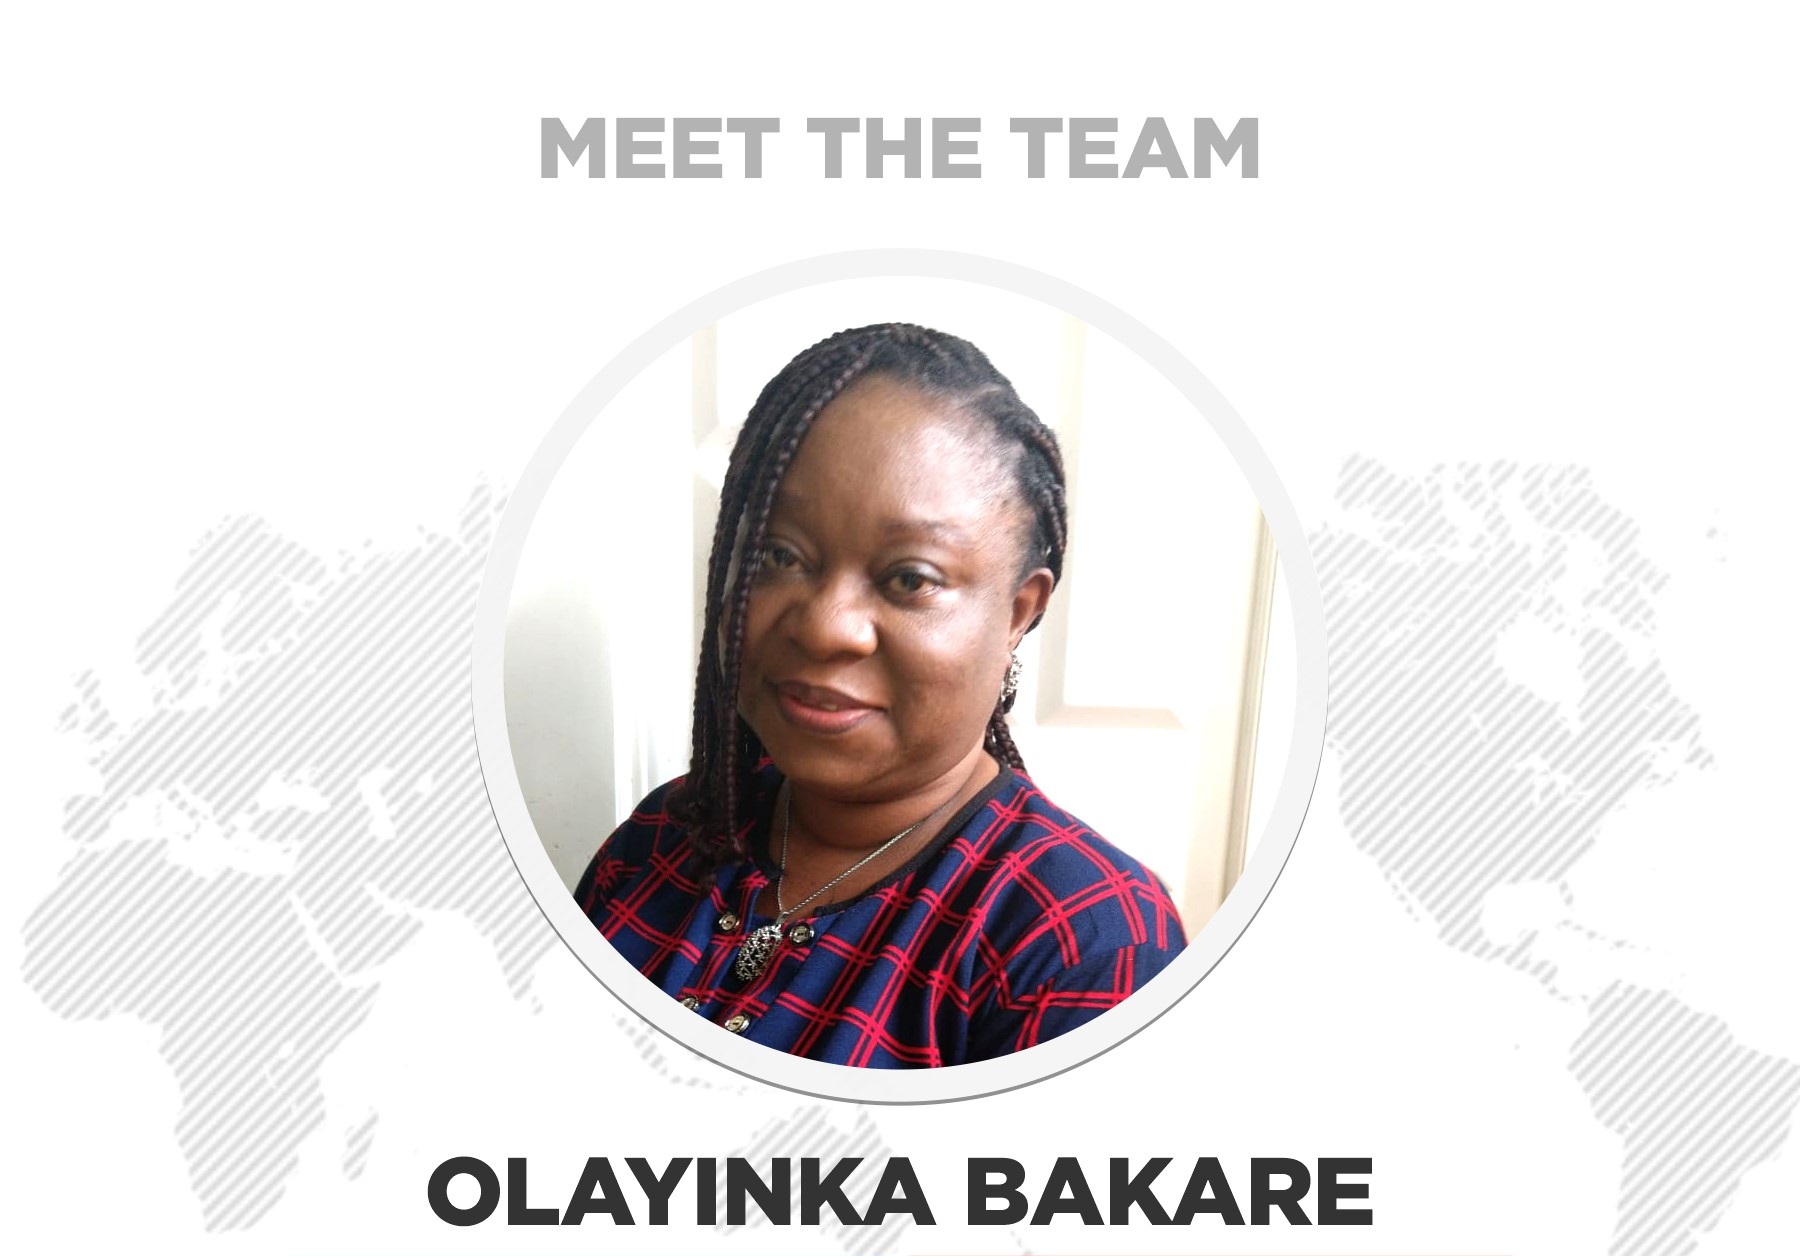 Olayinka Bakare, Academy Alumni and Mentor